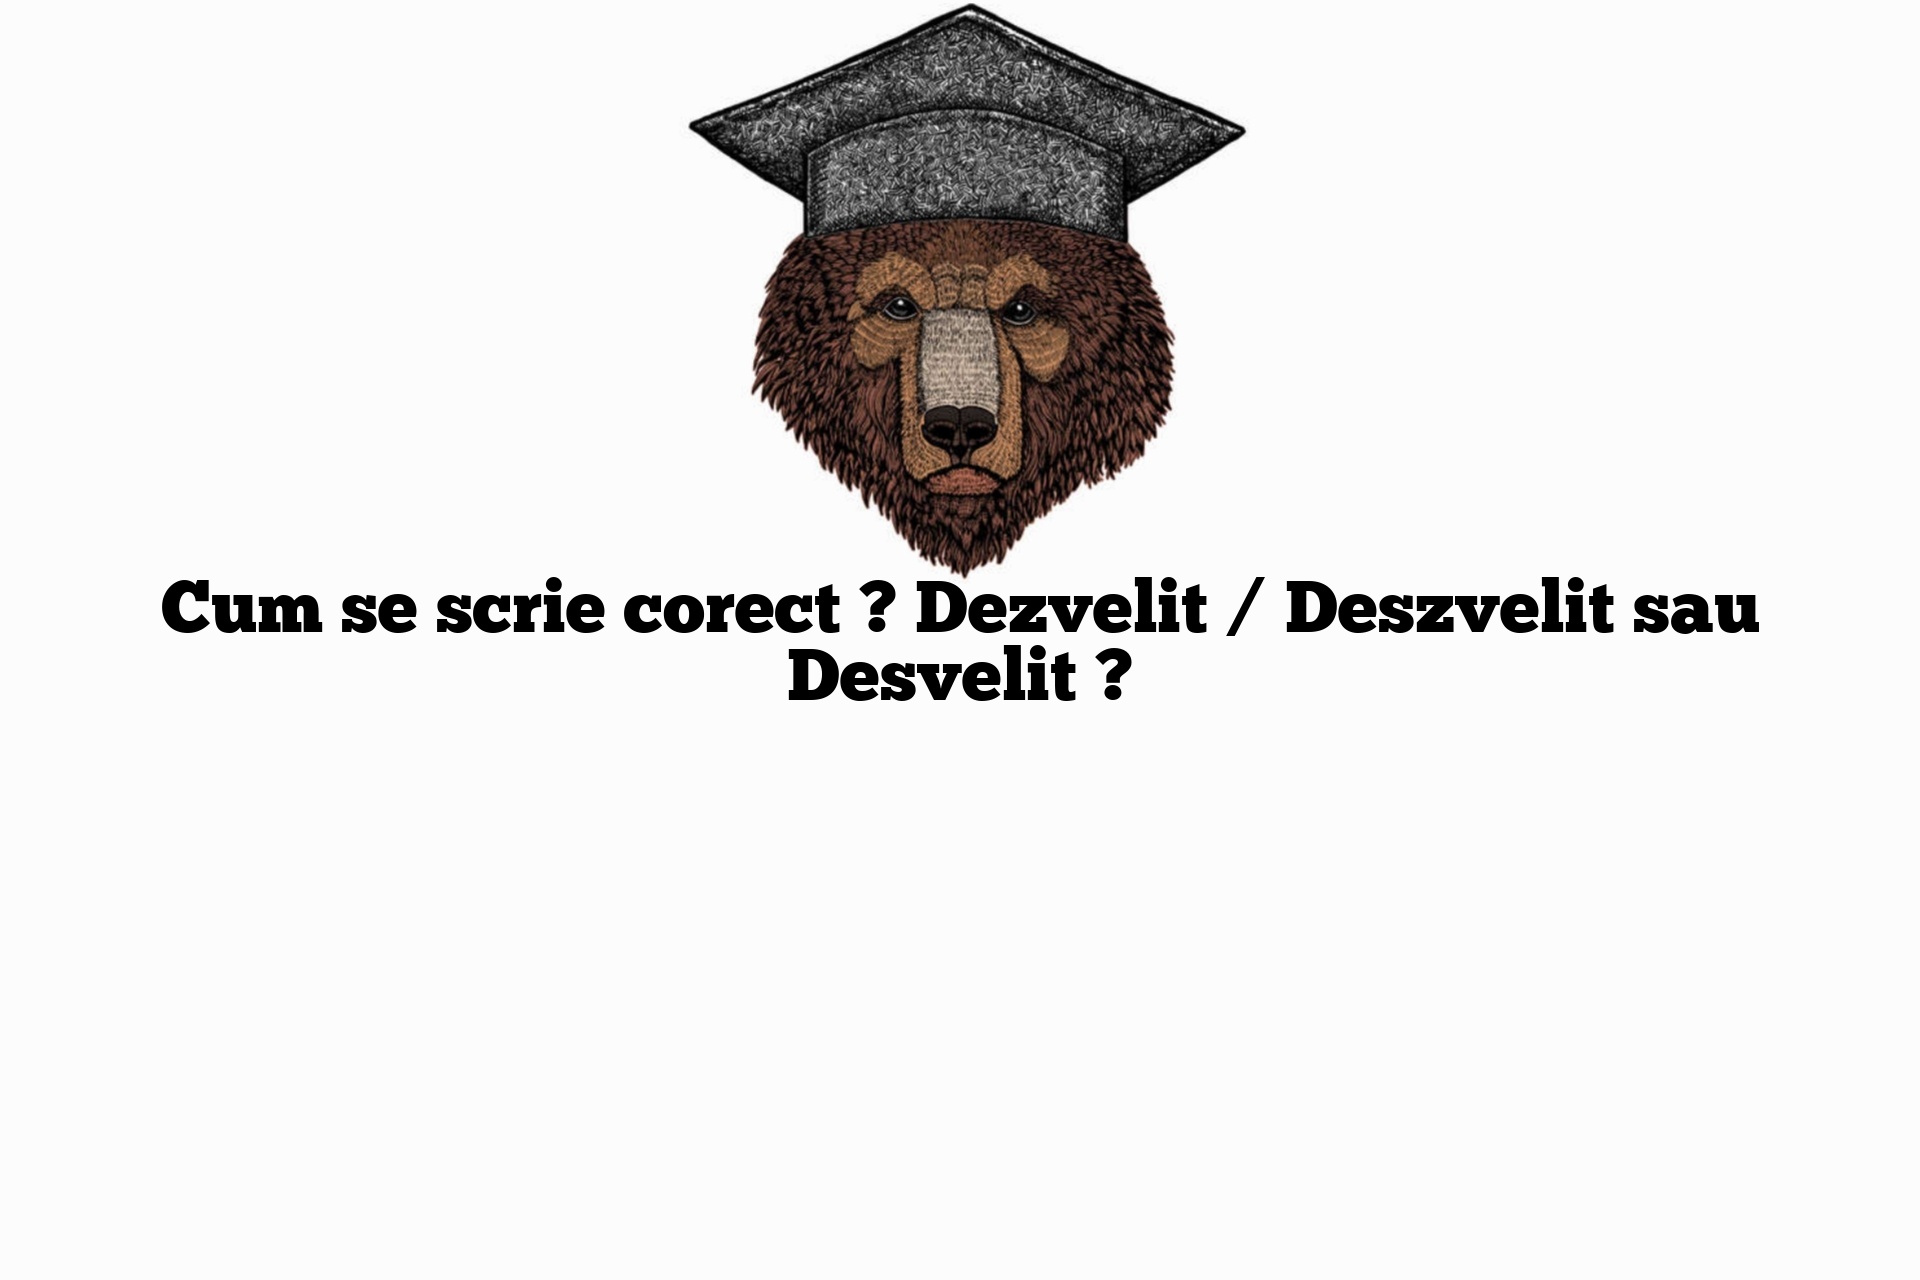 Cum se scrie corect ? Dezvelit / Deszvelit sau Desvelit ?